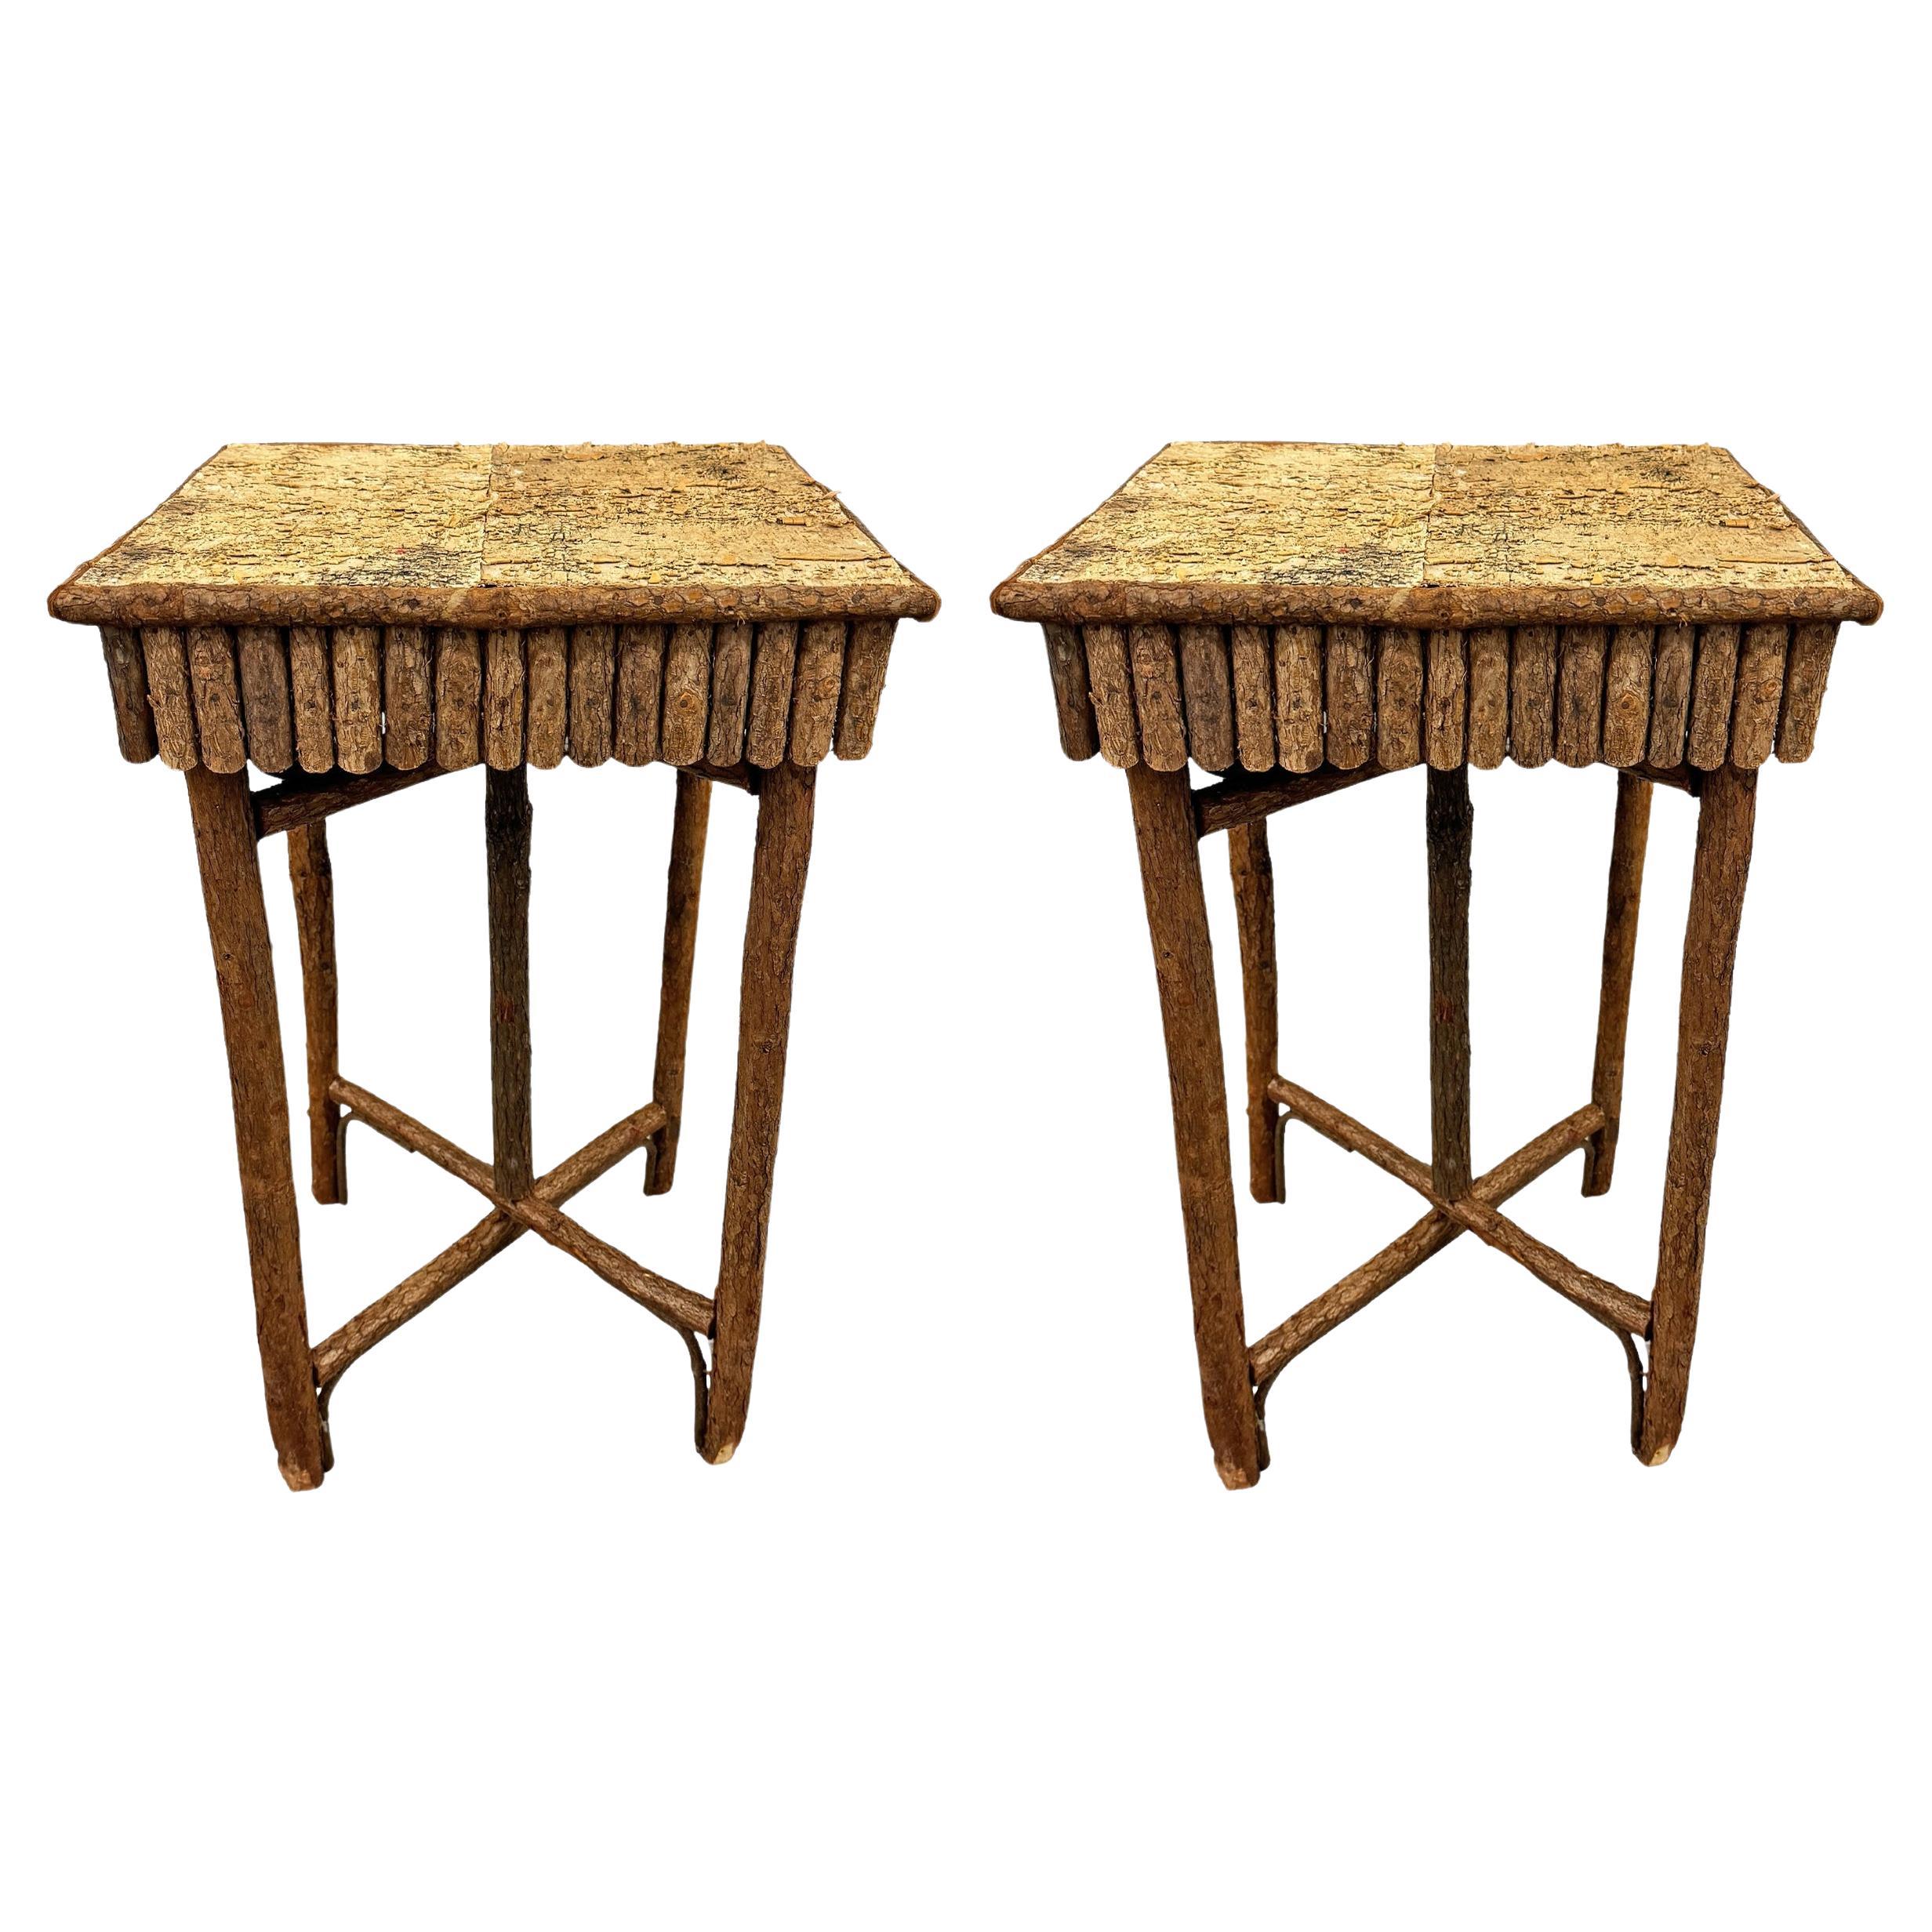 20th Century American Birch Bark Tables